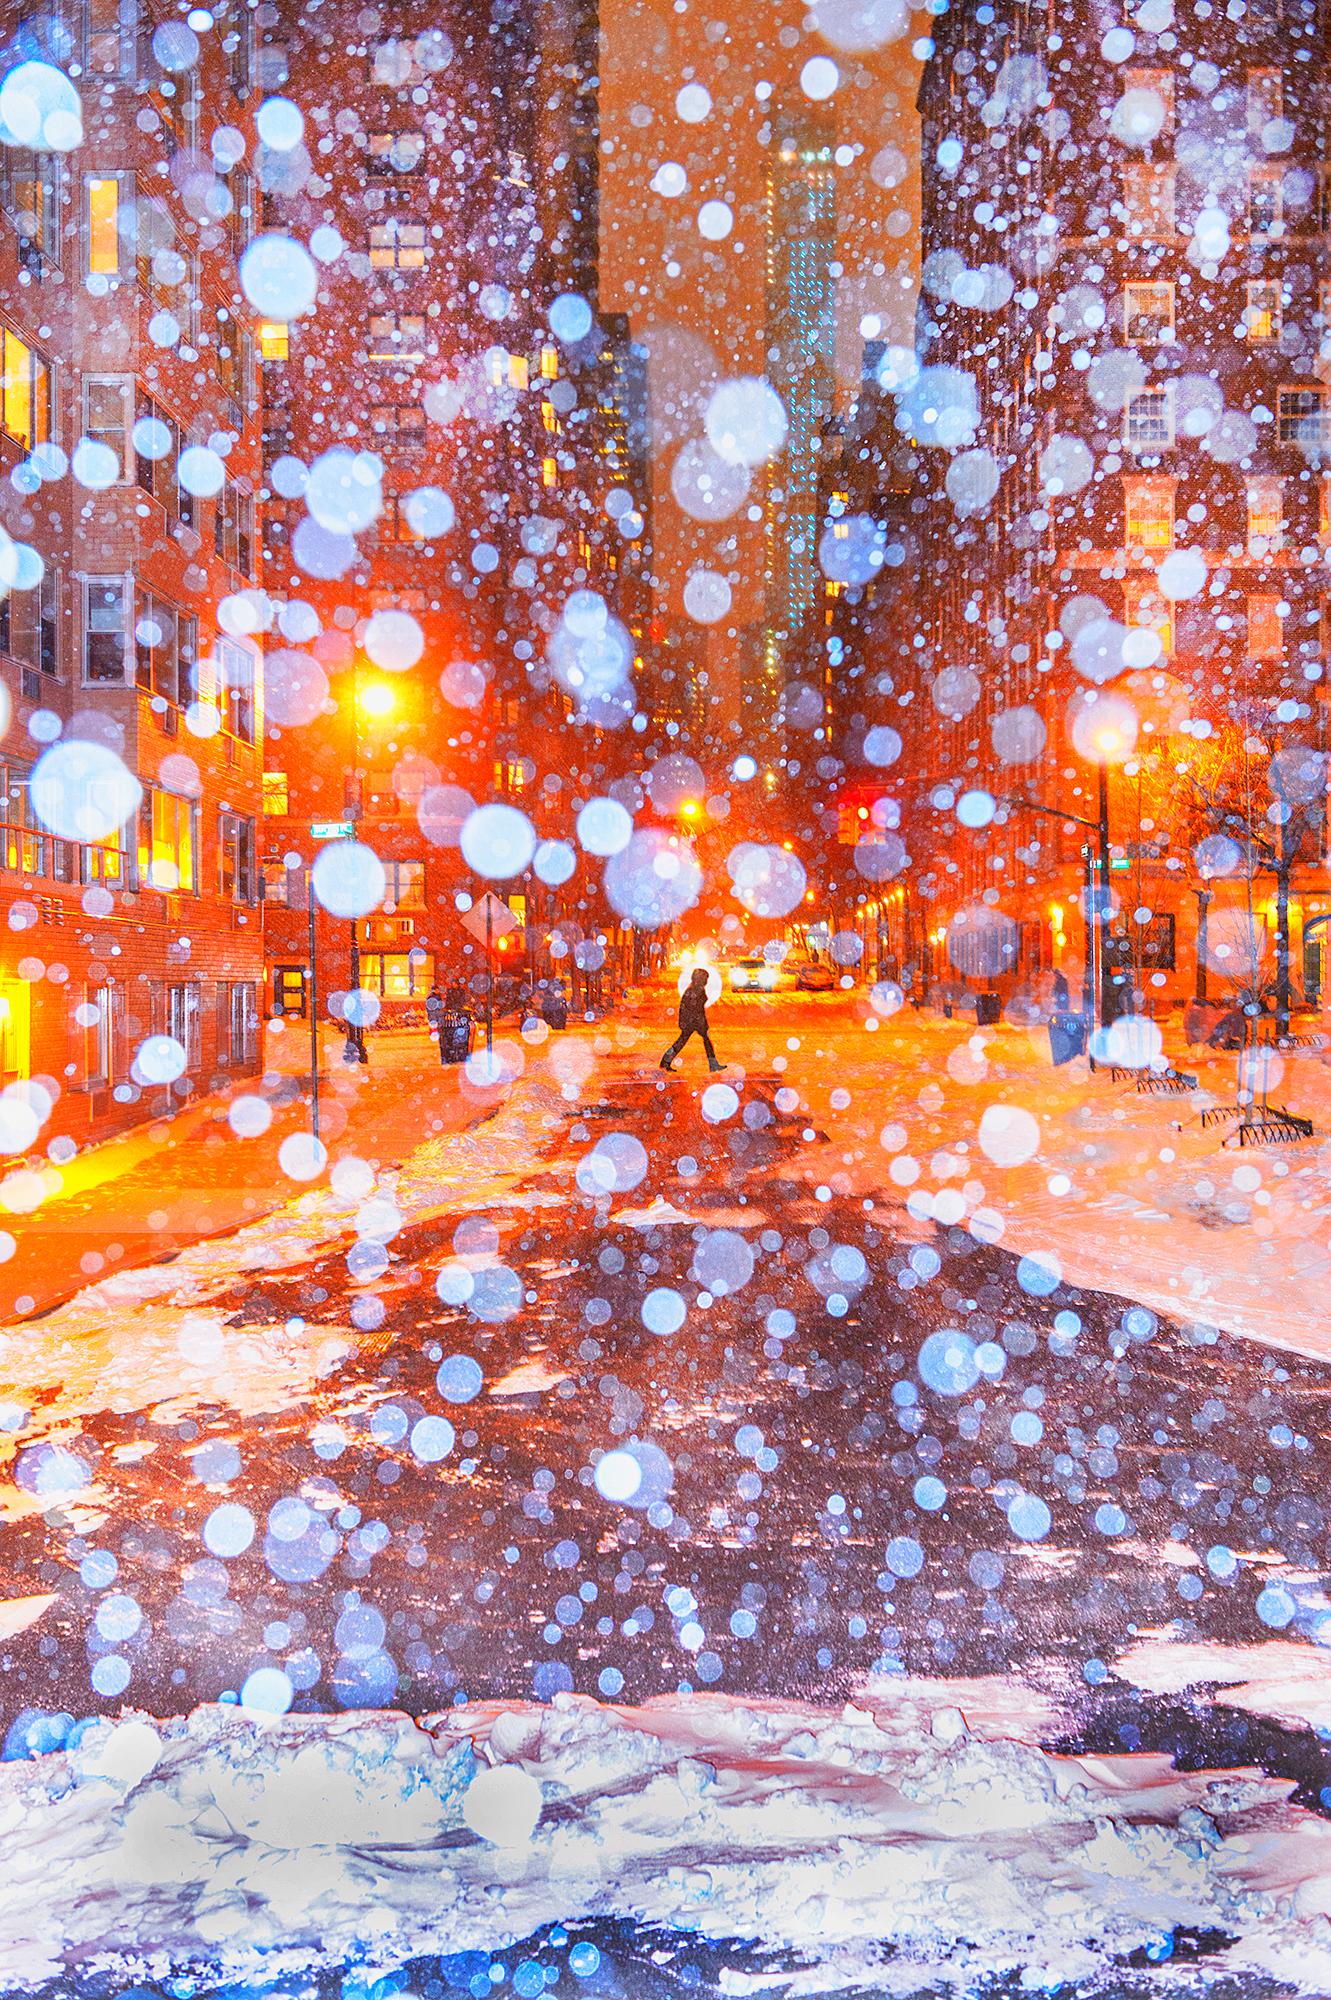 Mitchell Funk Abstract Photograph - Snowy Night, Rainy Night in Manhattan with Orange Sky